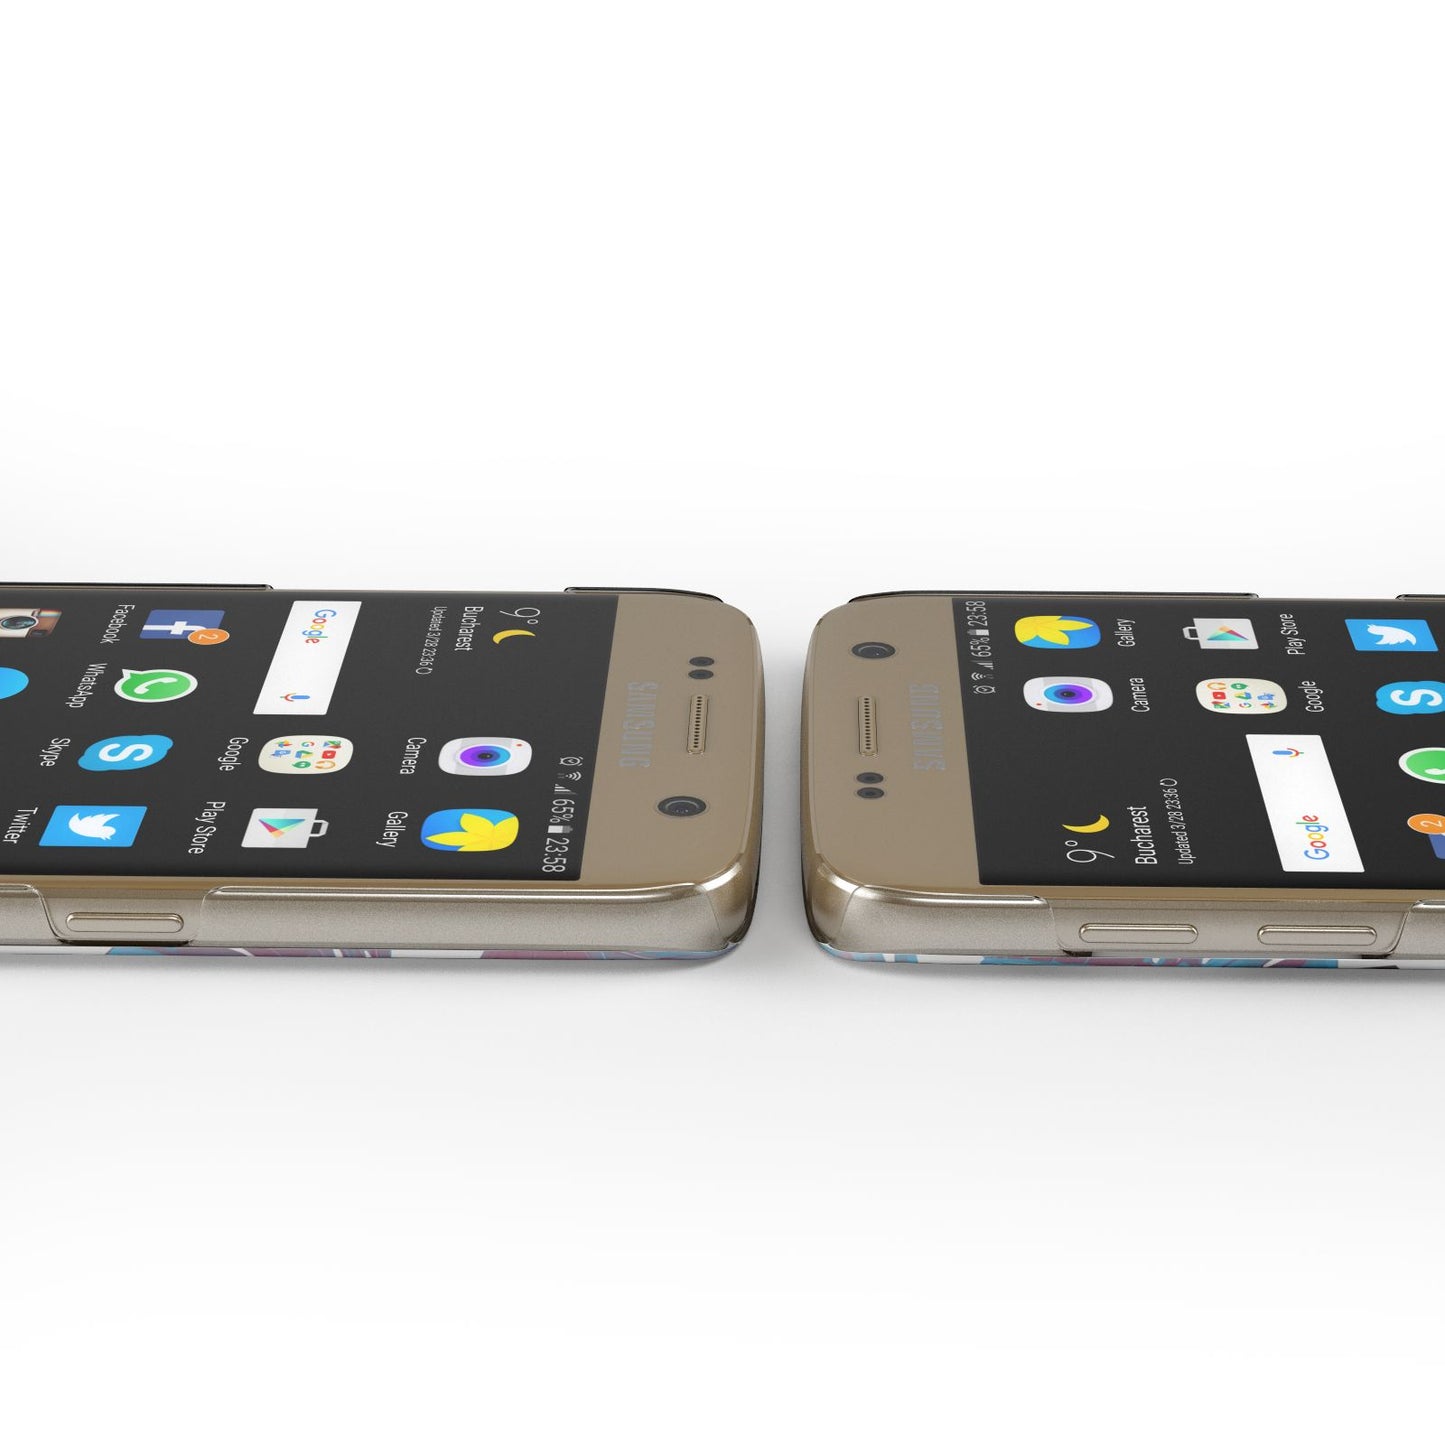 Personalised Blue Monstera Leaves Samsung Galaxy Case Ports Cutout.jpg